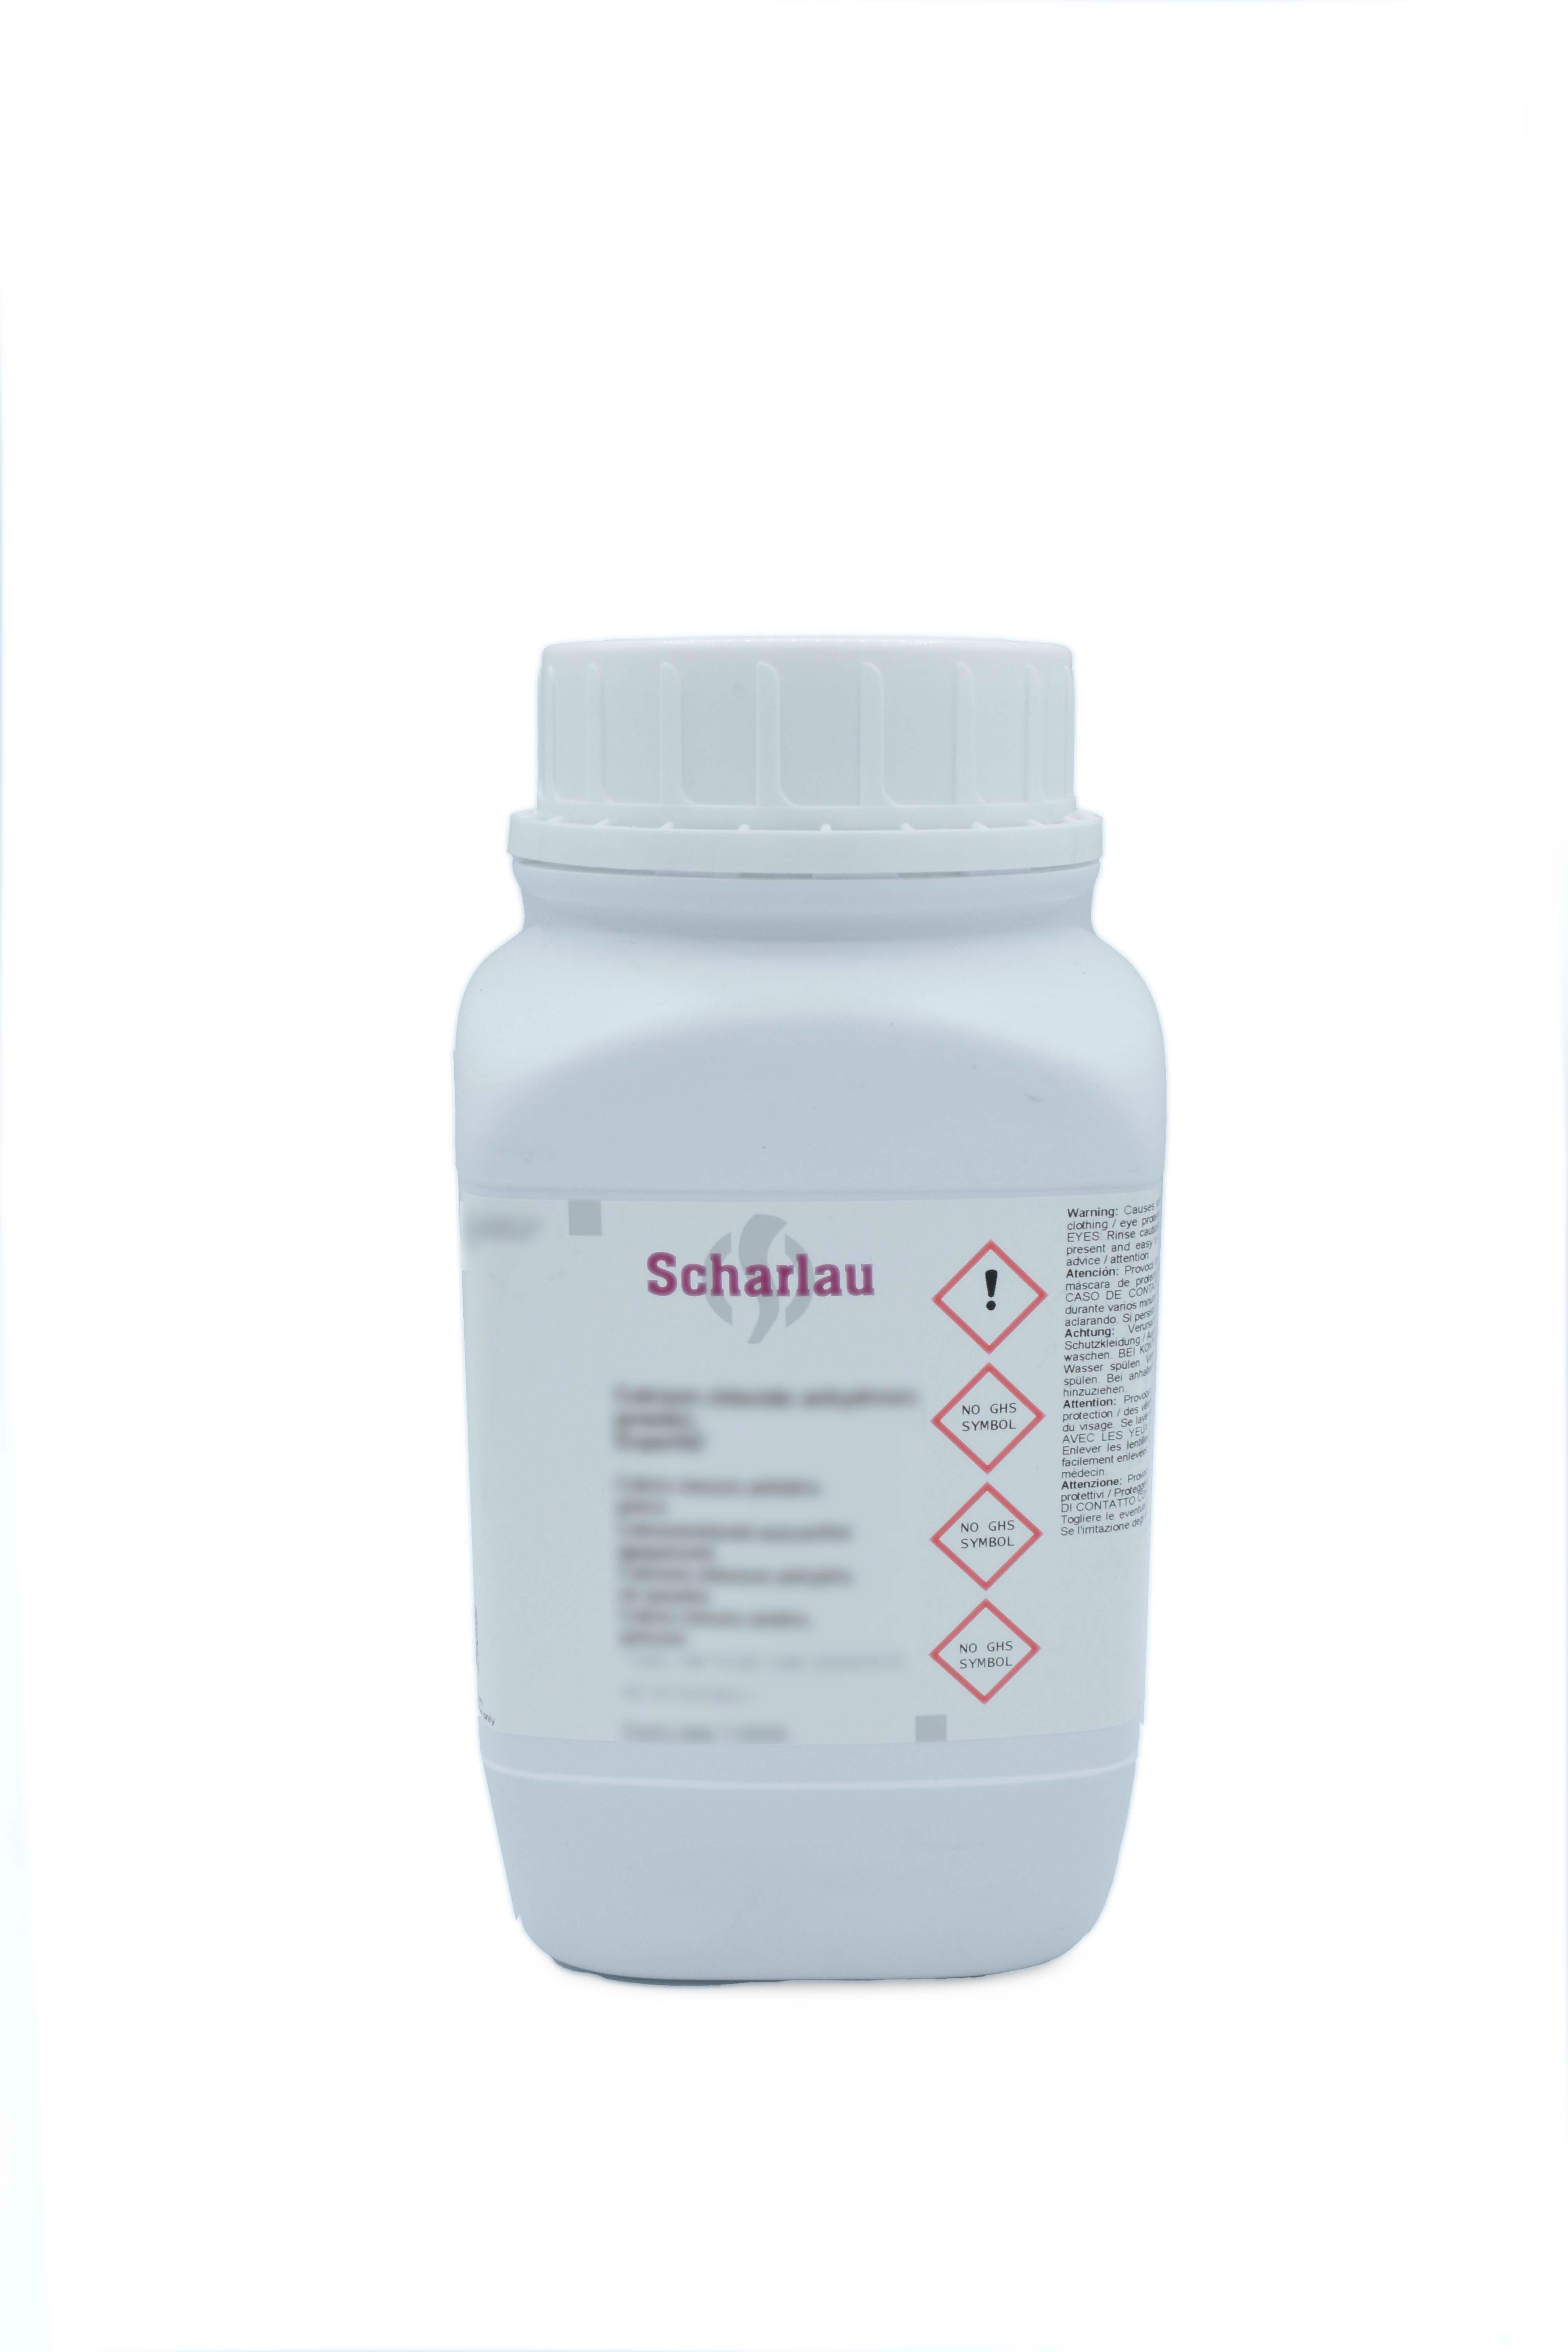 di-Potassium hydrogen phosphate anhydrous, Pharmpur®, Ph Eur, BP